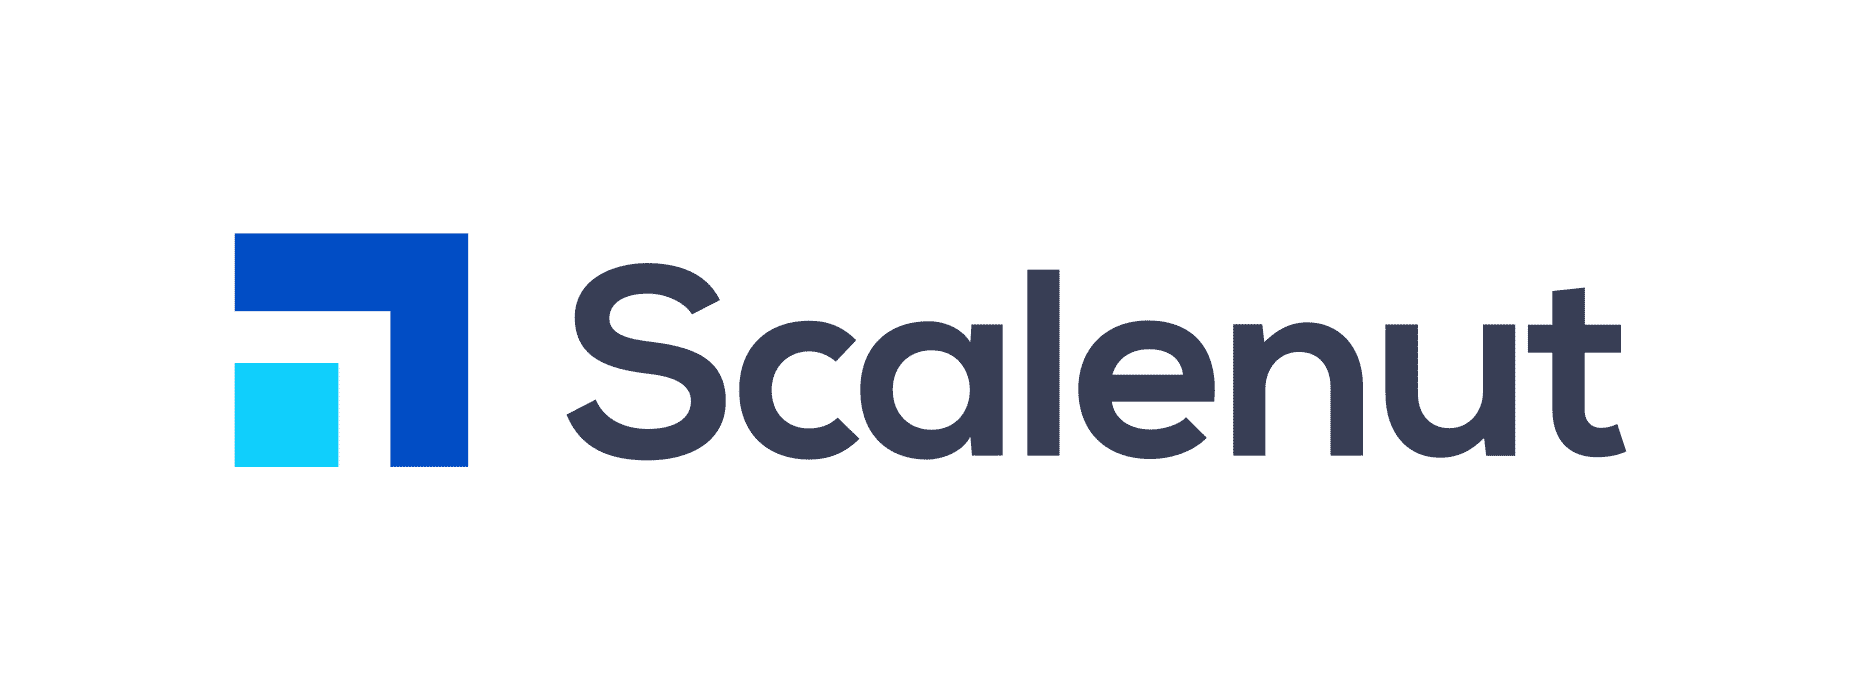 Scalenut logo